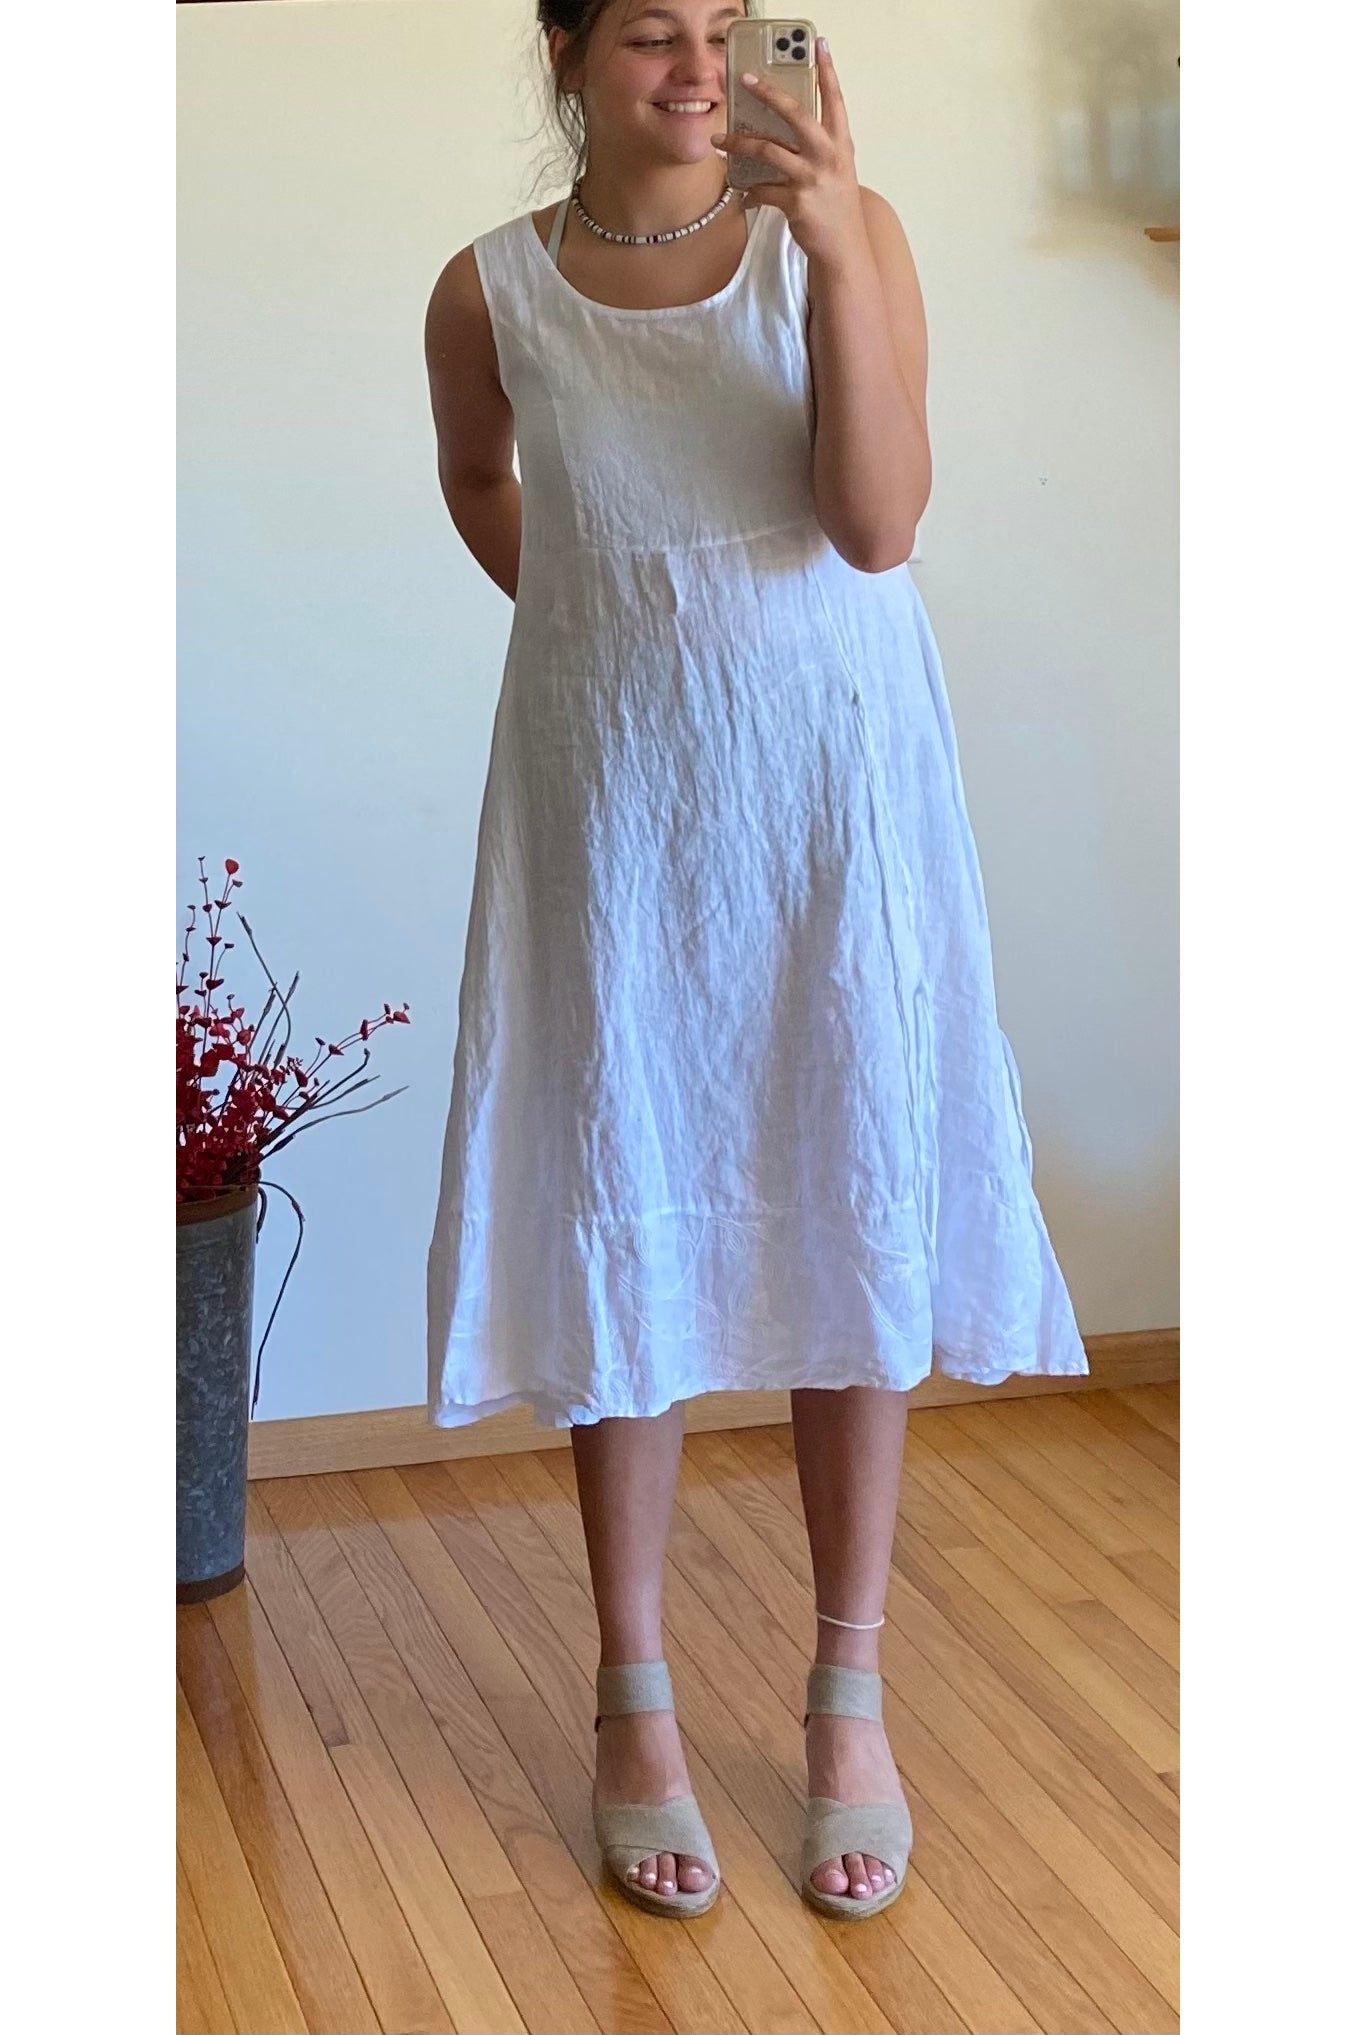 Bella Amore' - White Linen Dress - 2195